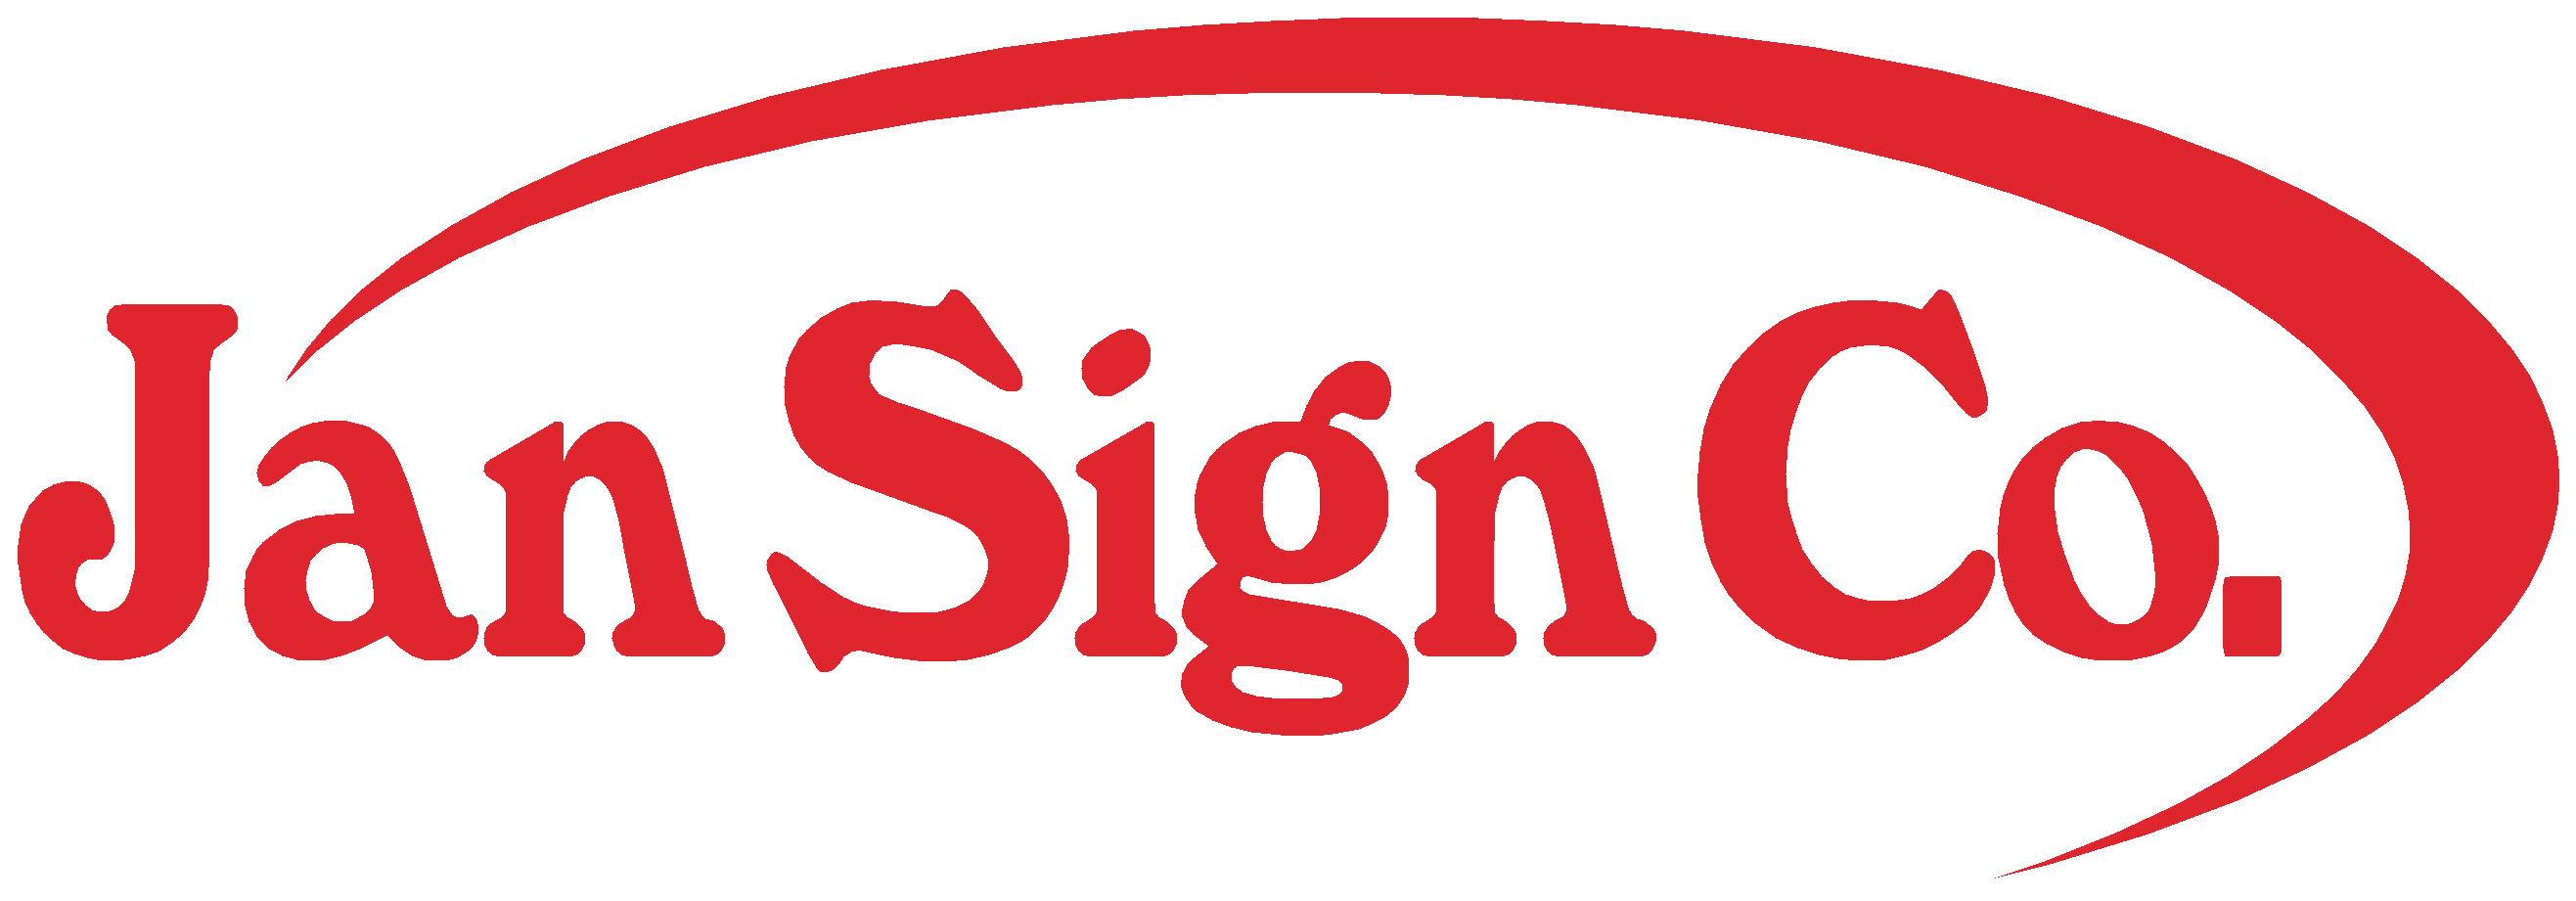 Jan Sign Company